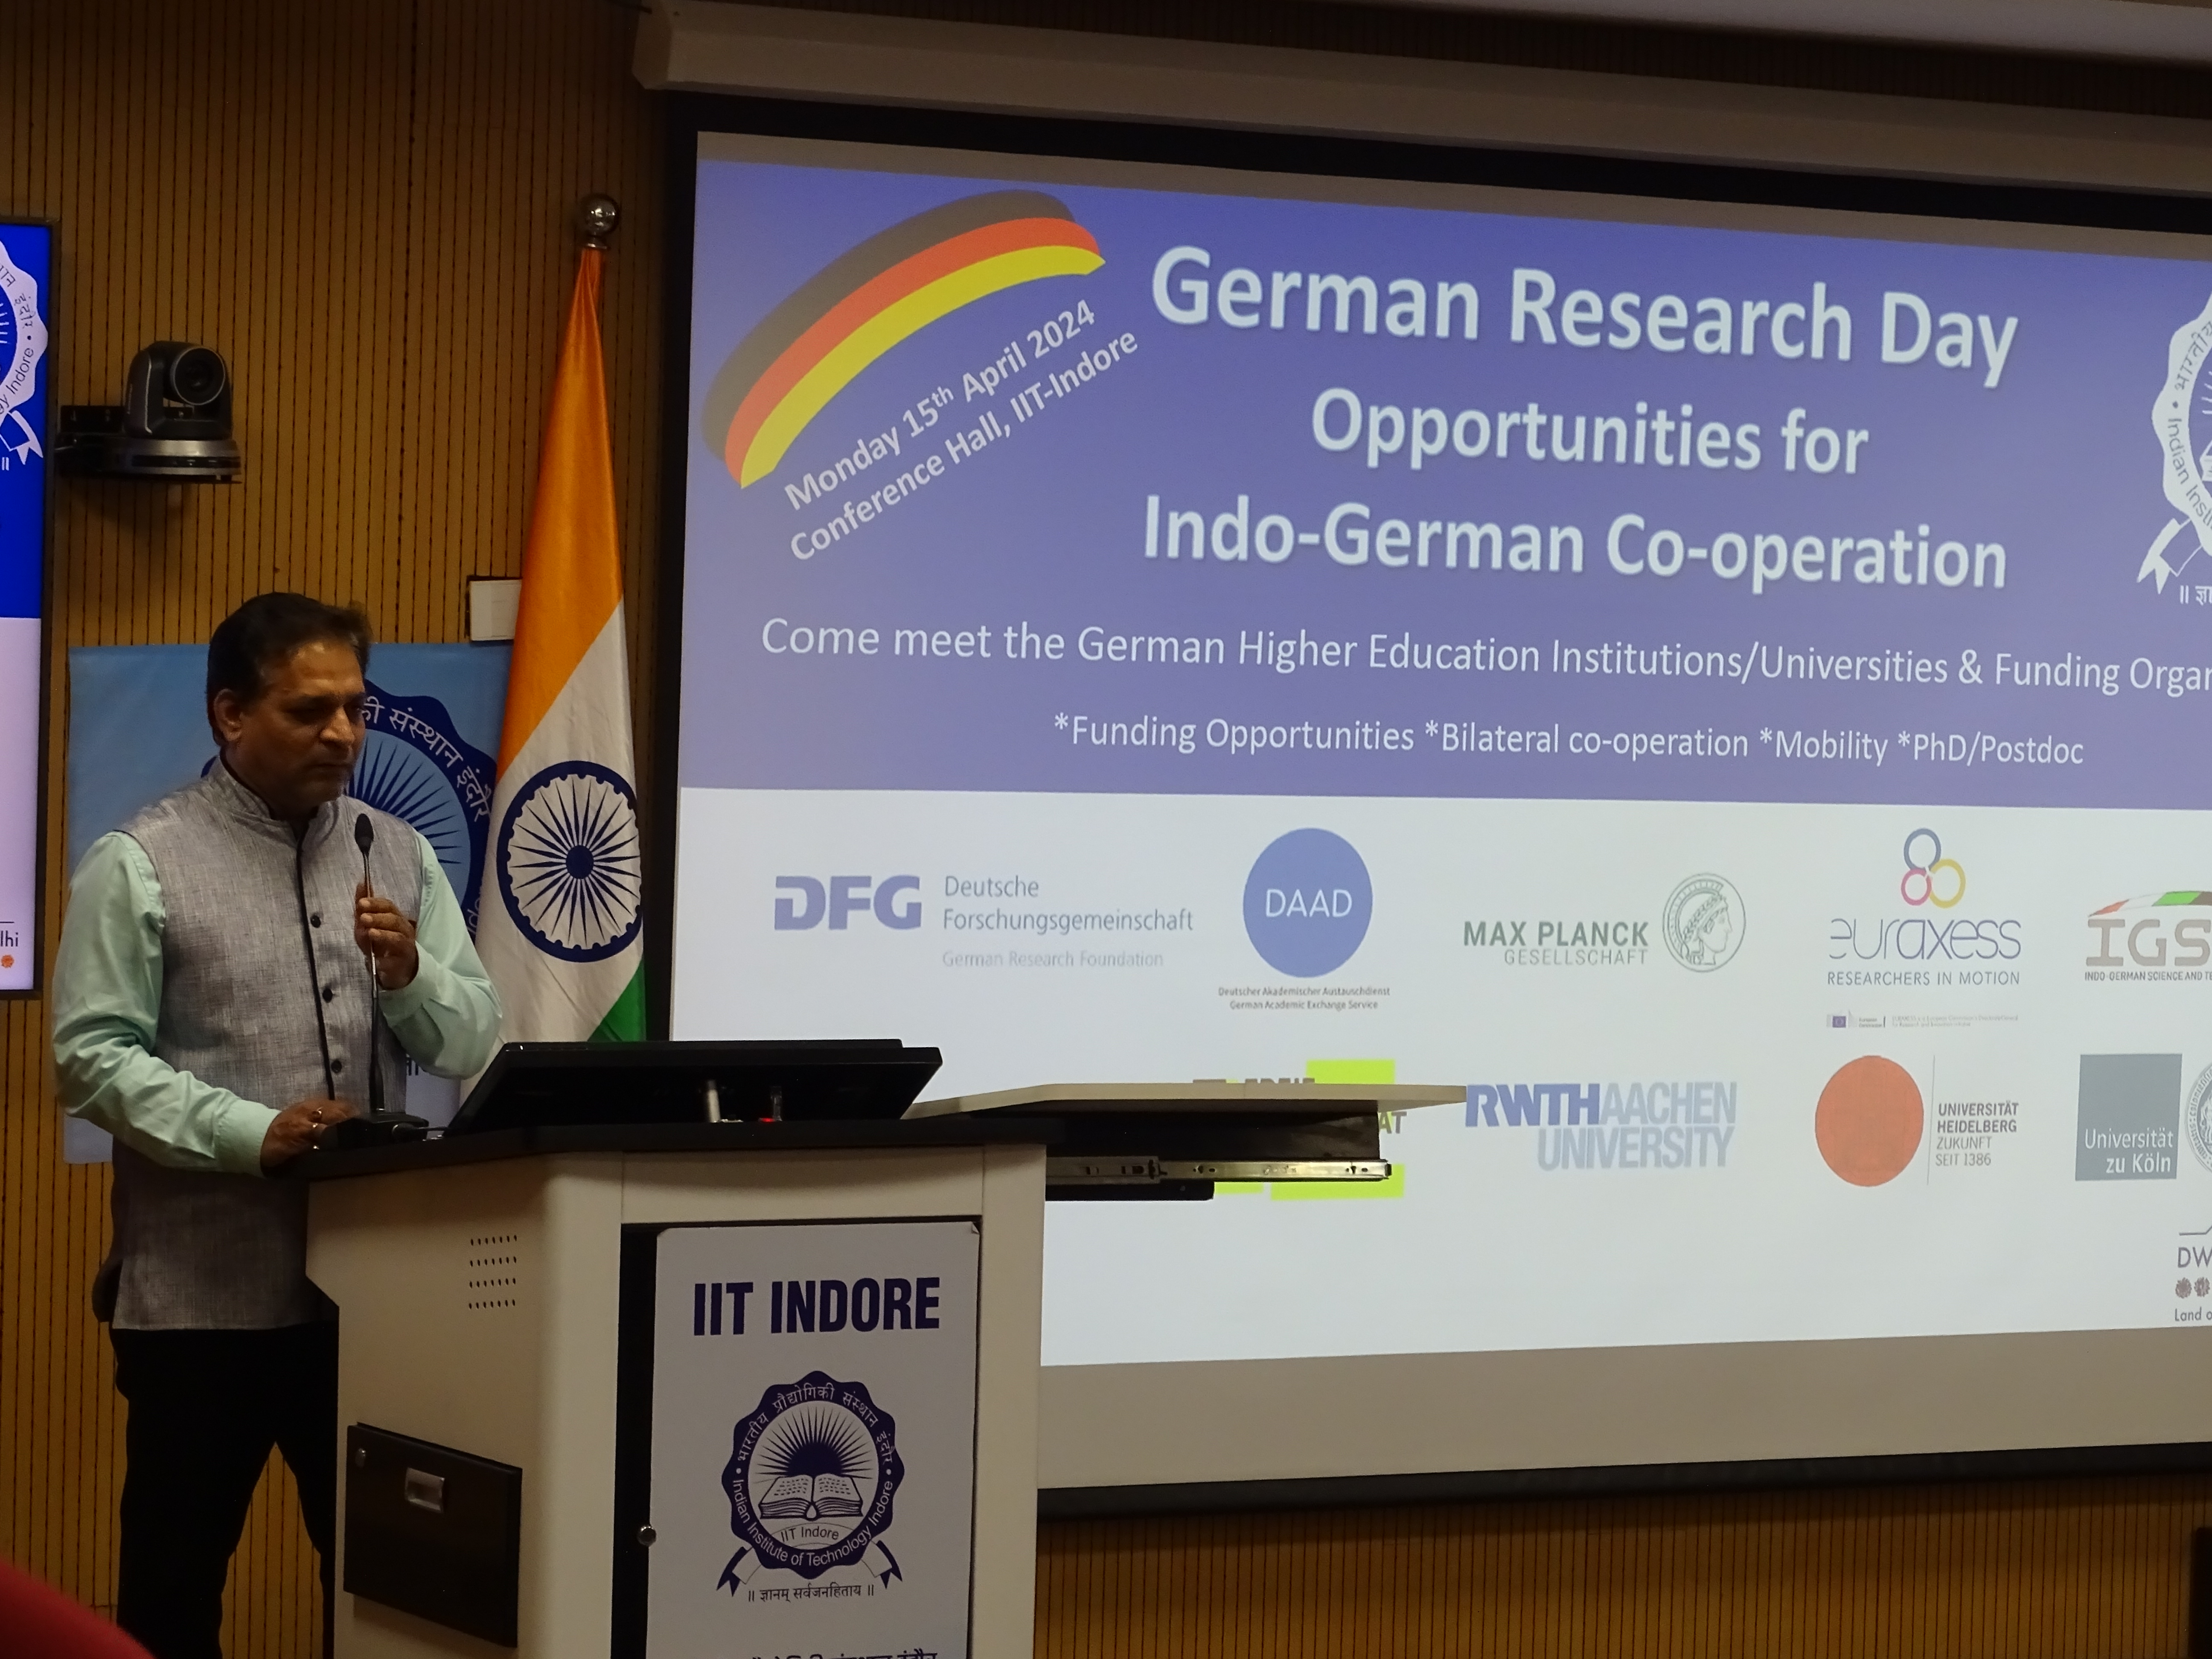 Impressions of IIT Indore: Prof. Dr. Avinash Sonawane, Dean International Relations